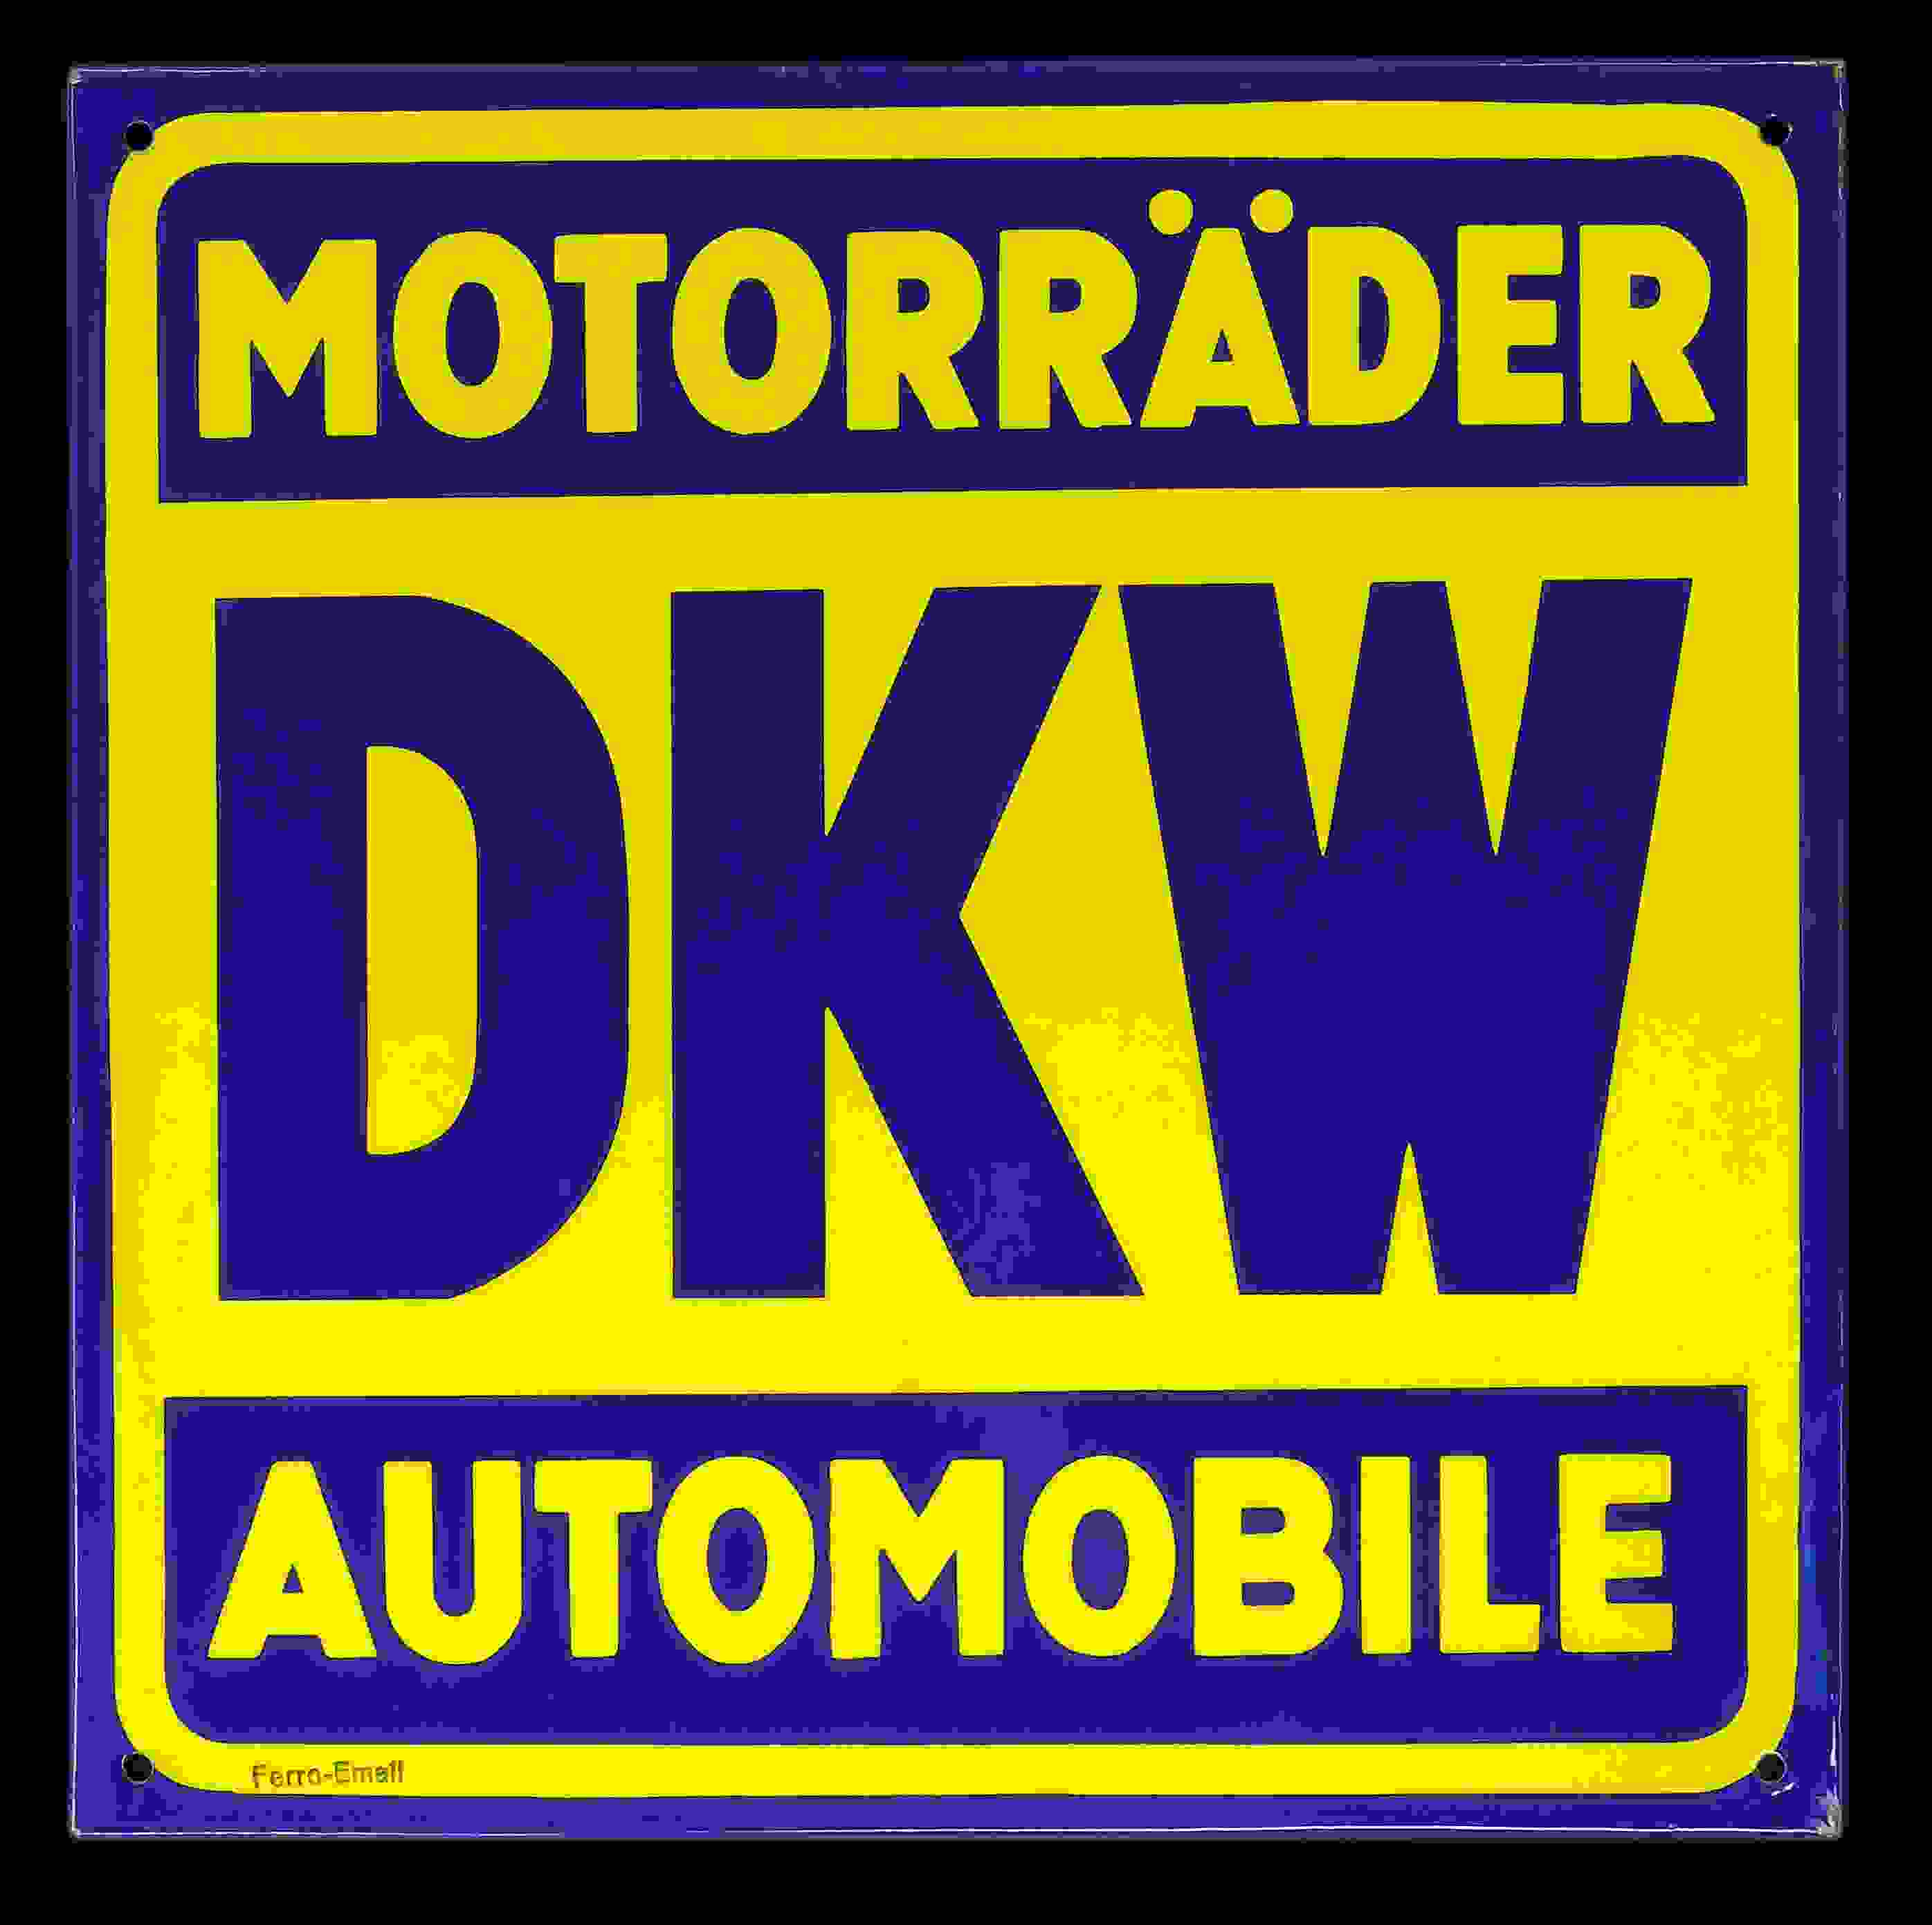 DKW Motorräder Automobile 